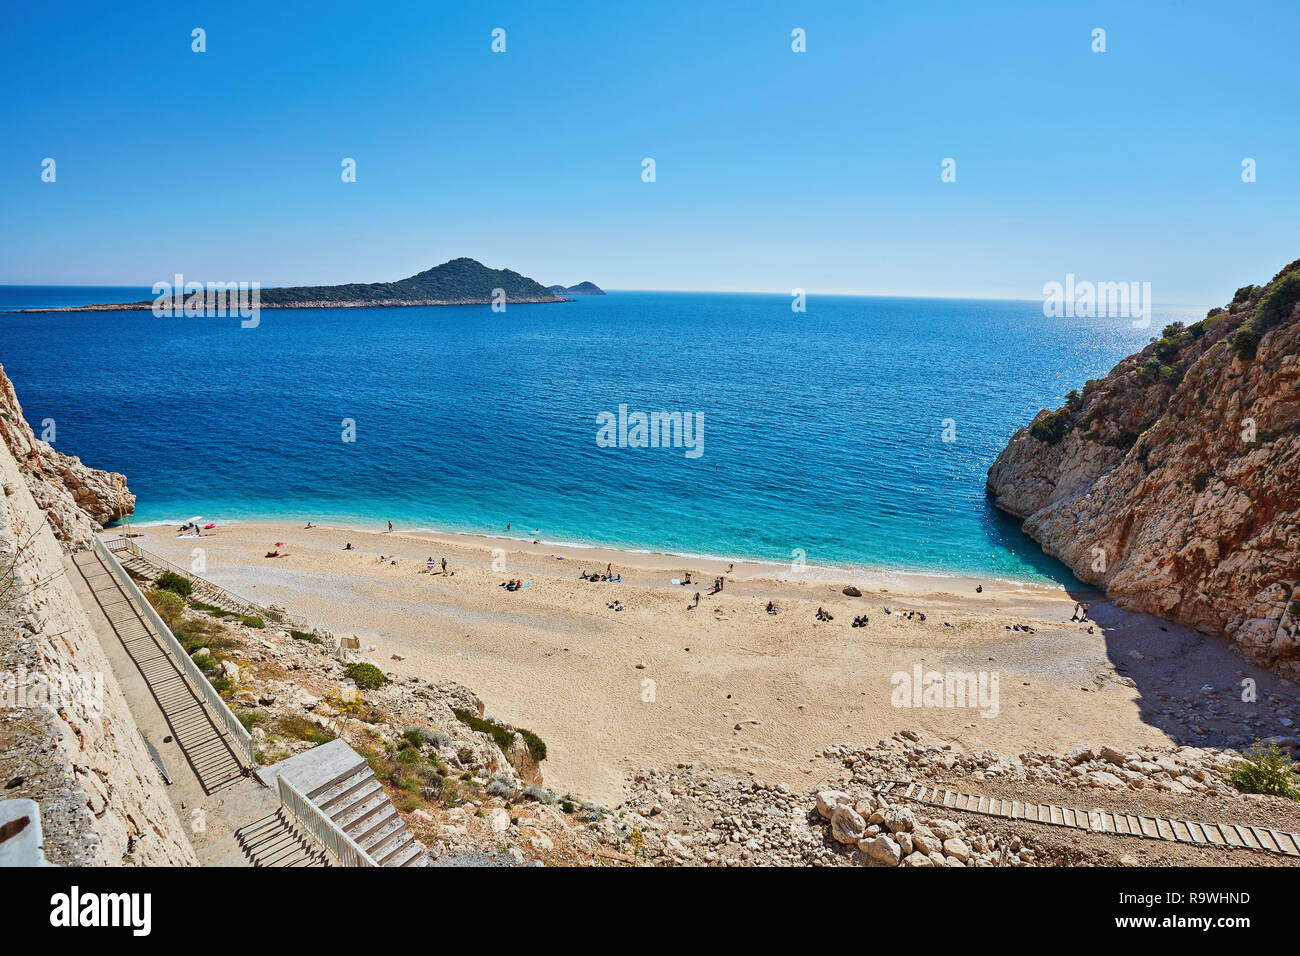 Tourists sunbathing and swimming on the Kaputas Beach, Kas, Antalya Turkey Stock Photo